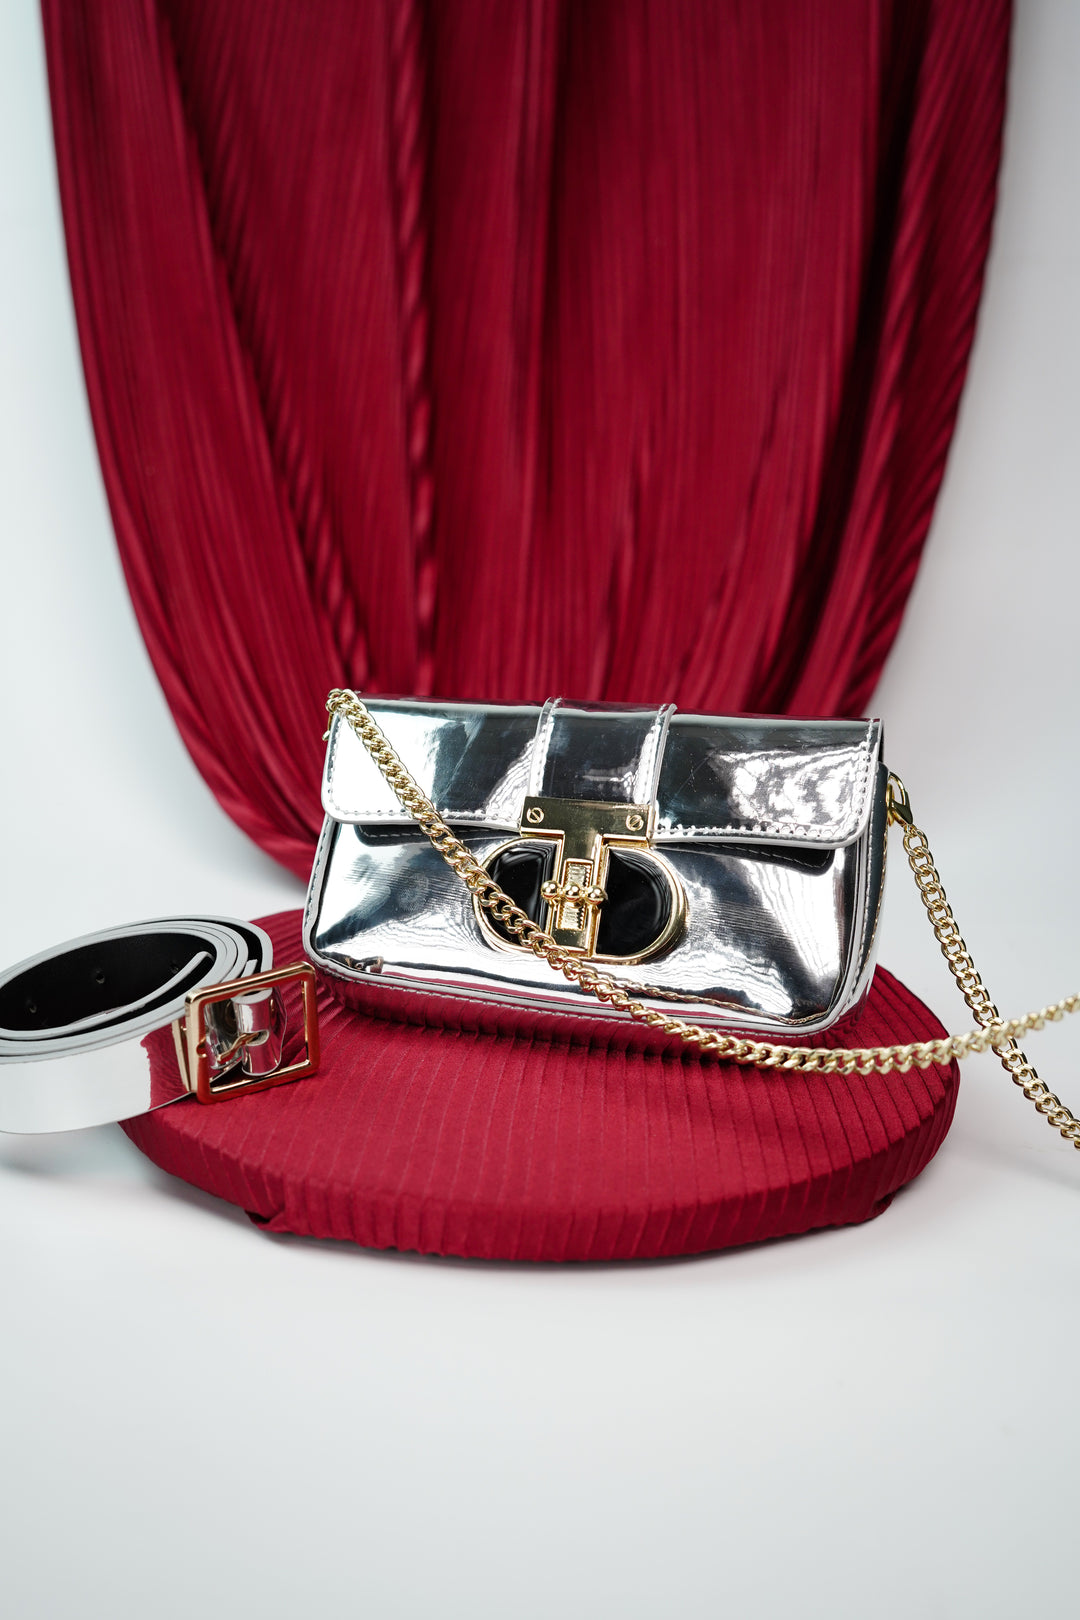 Elegantly Designed Galaxy Gleam Waist Belt Bag with Celestial Accents